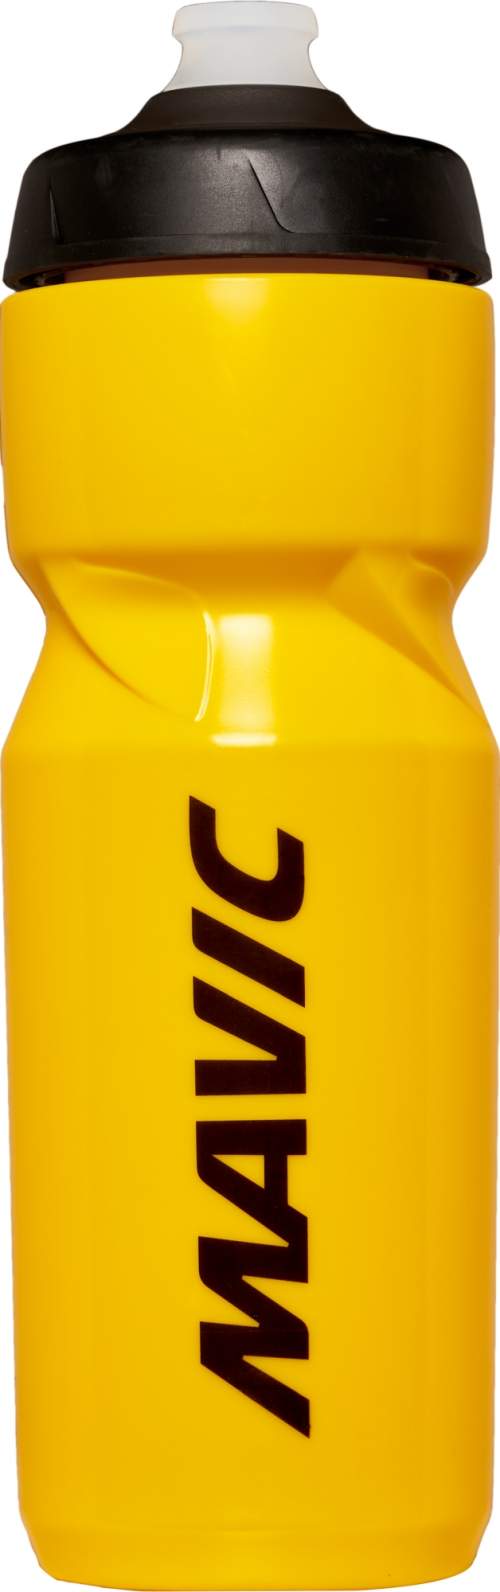 Mavic láhev 0,80 pro cap yellow Uni